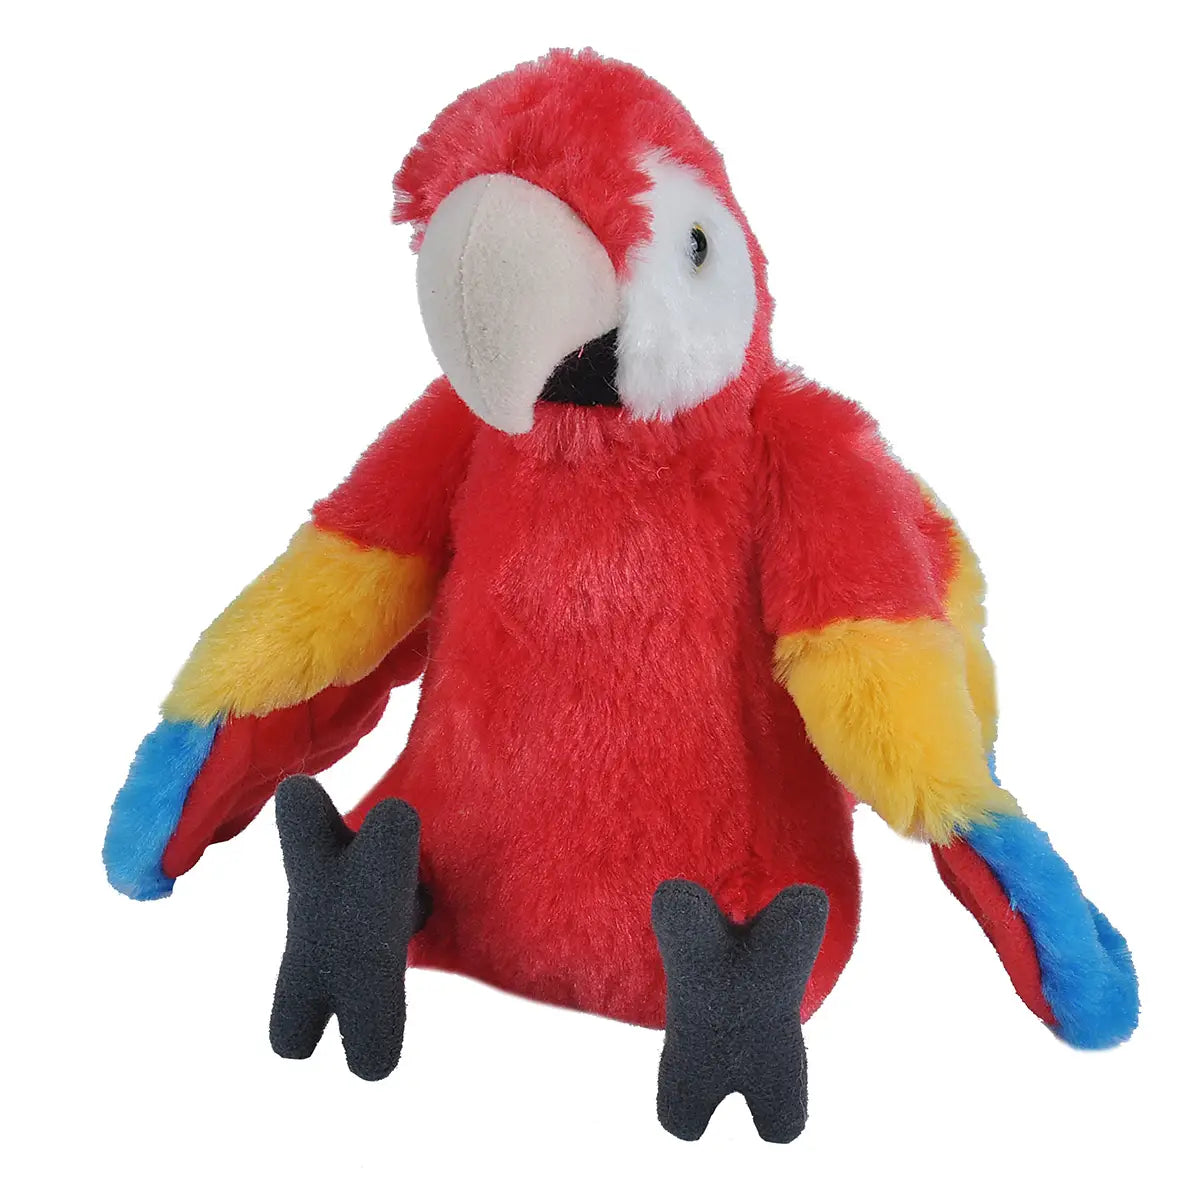 Scarlet Macaw Stuffed Animal - 12"